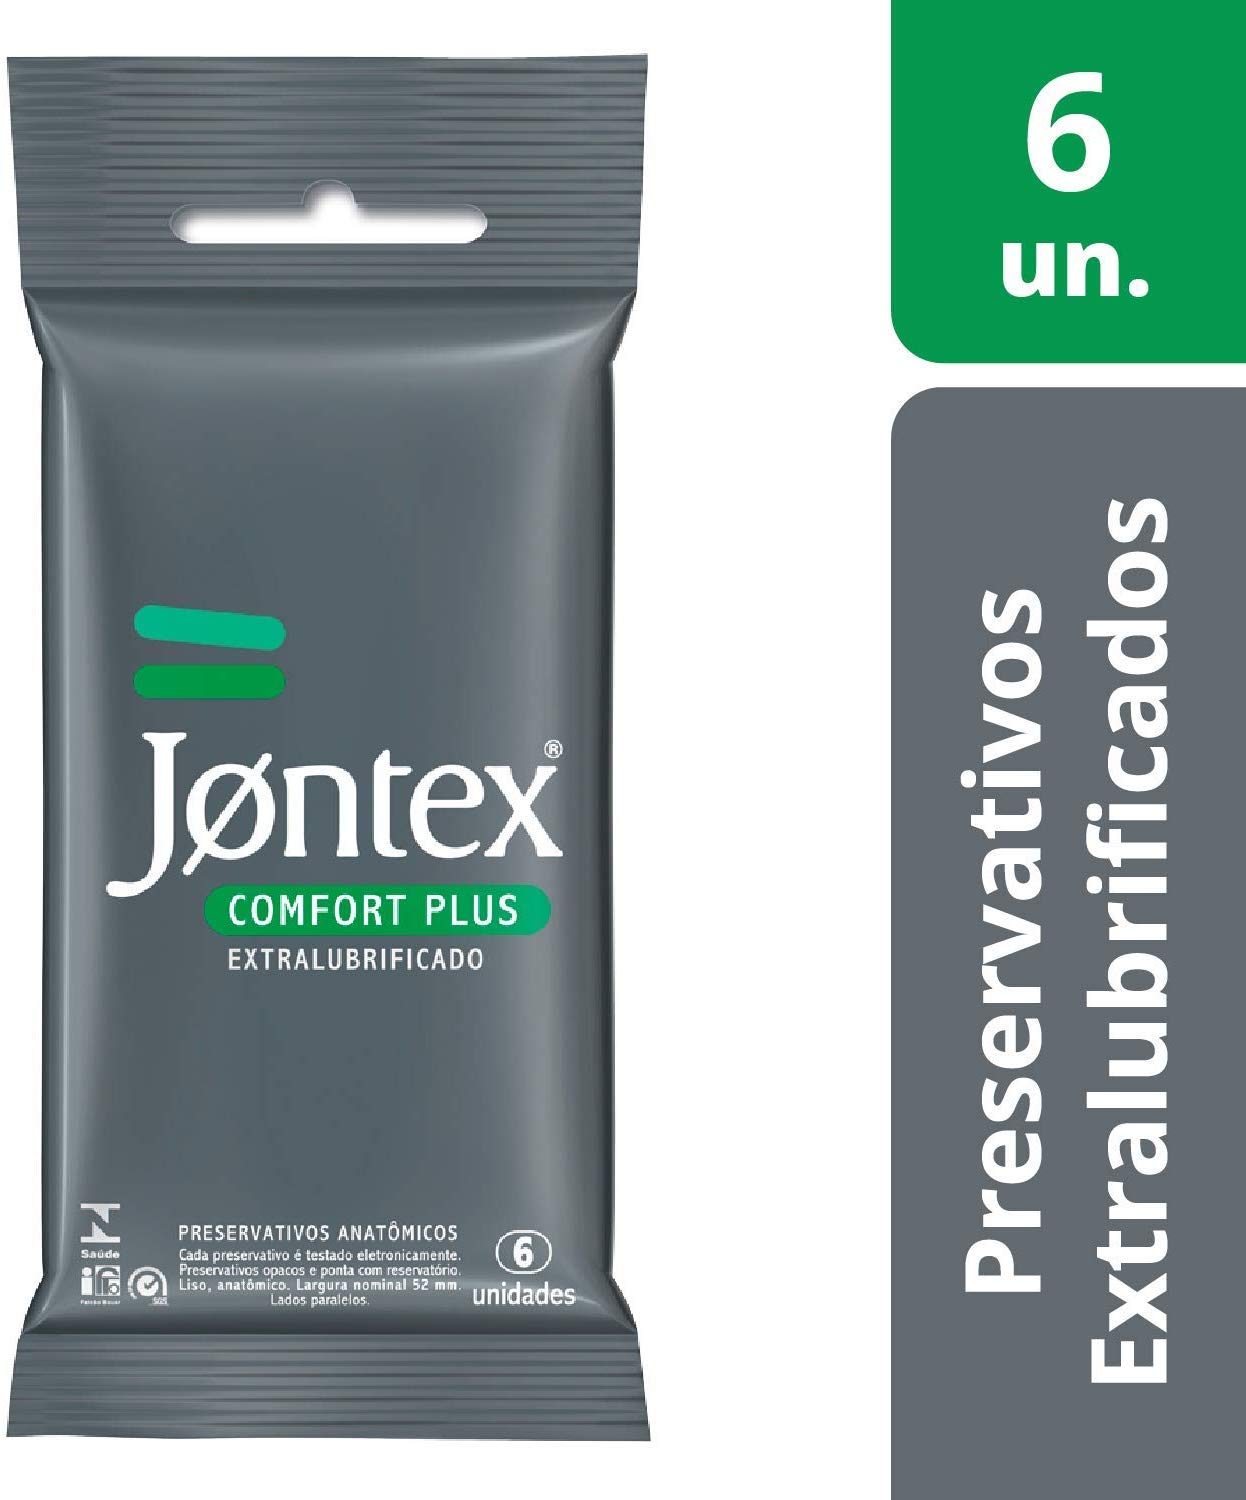 Imagem: Conjunto de 6 Preservativos Lubrificados Confort Plus, Jontex